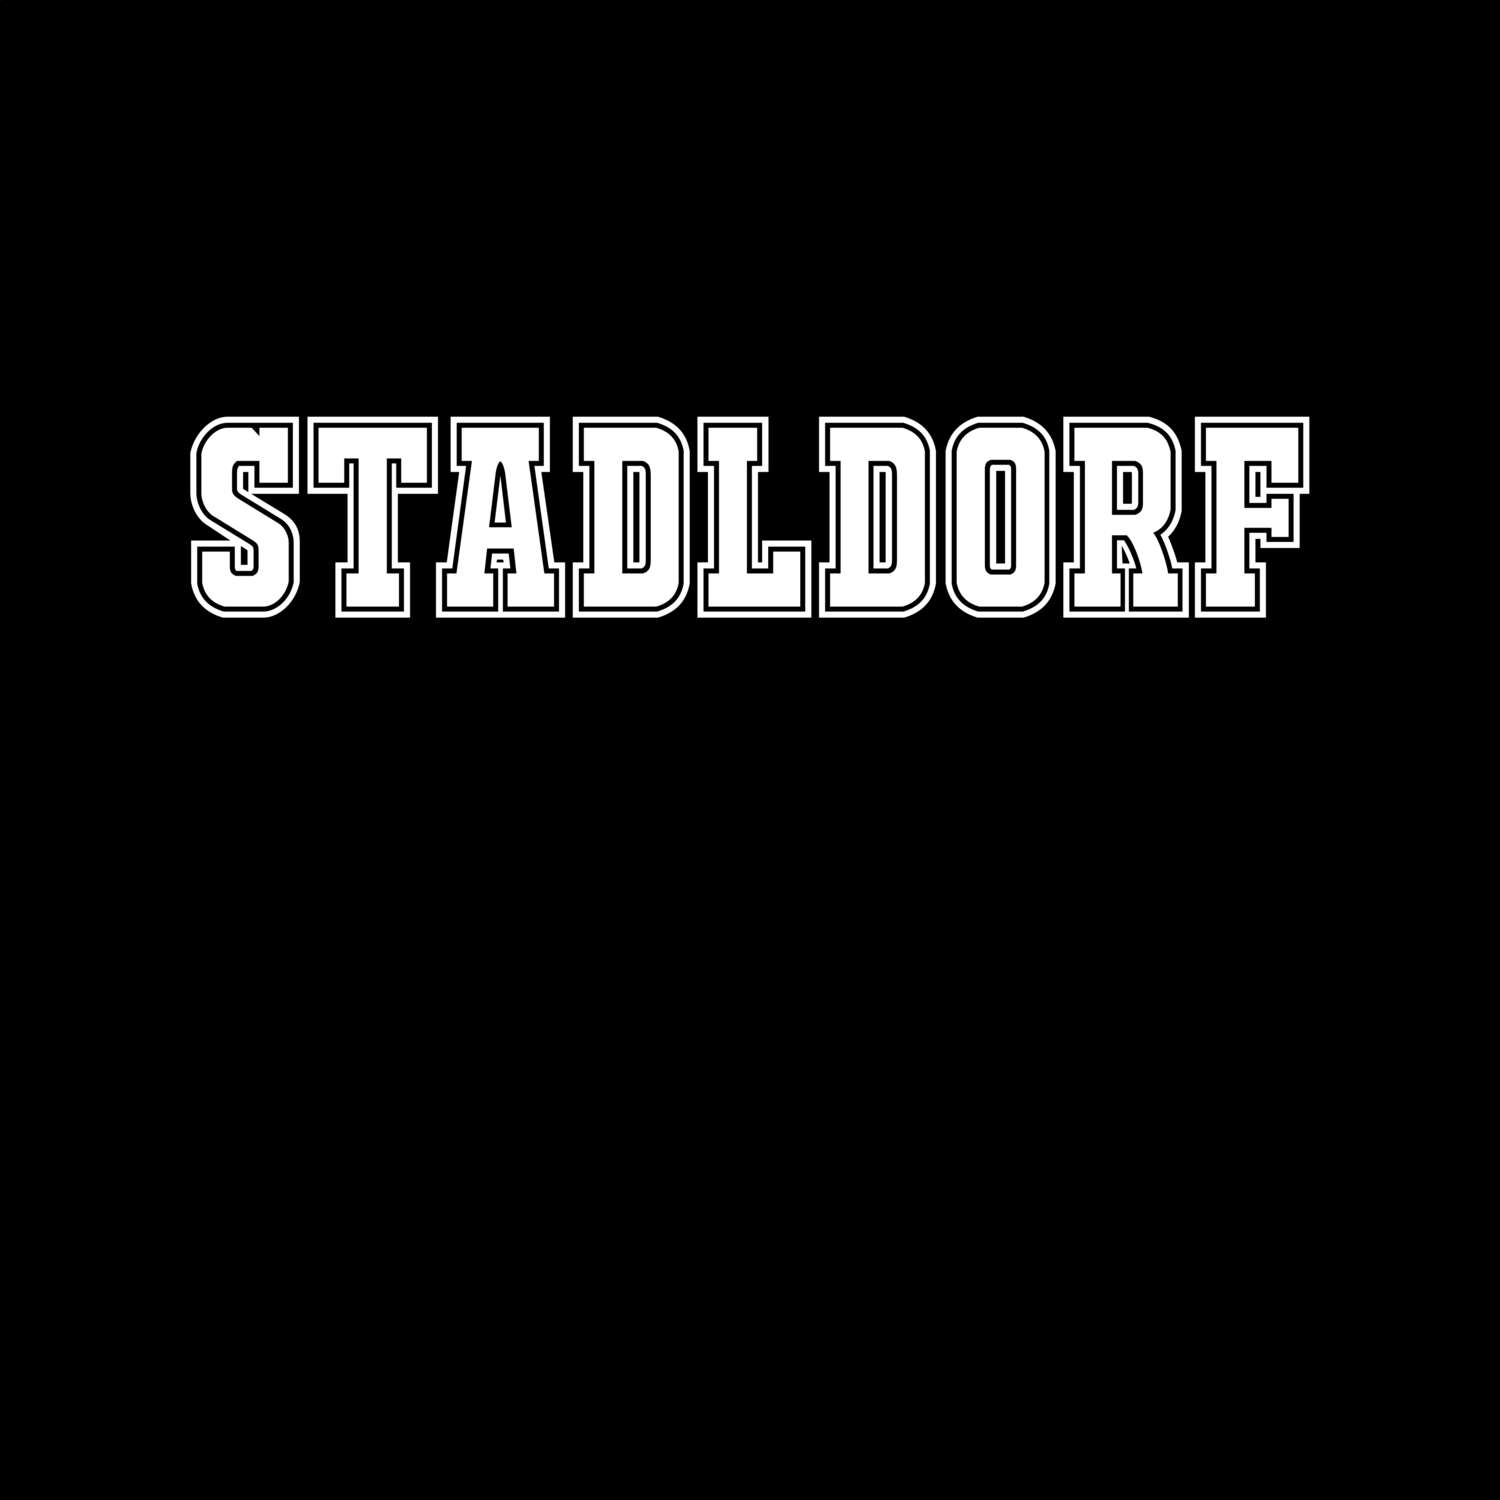 Stadldorf T-Shirt »Classic«